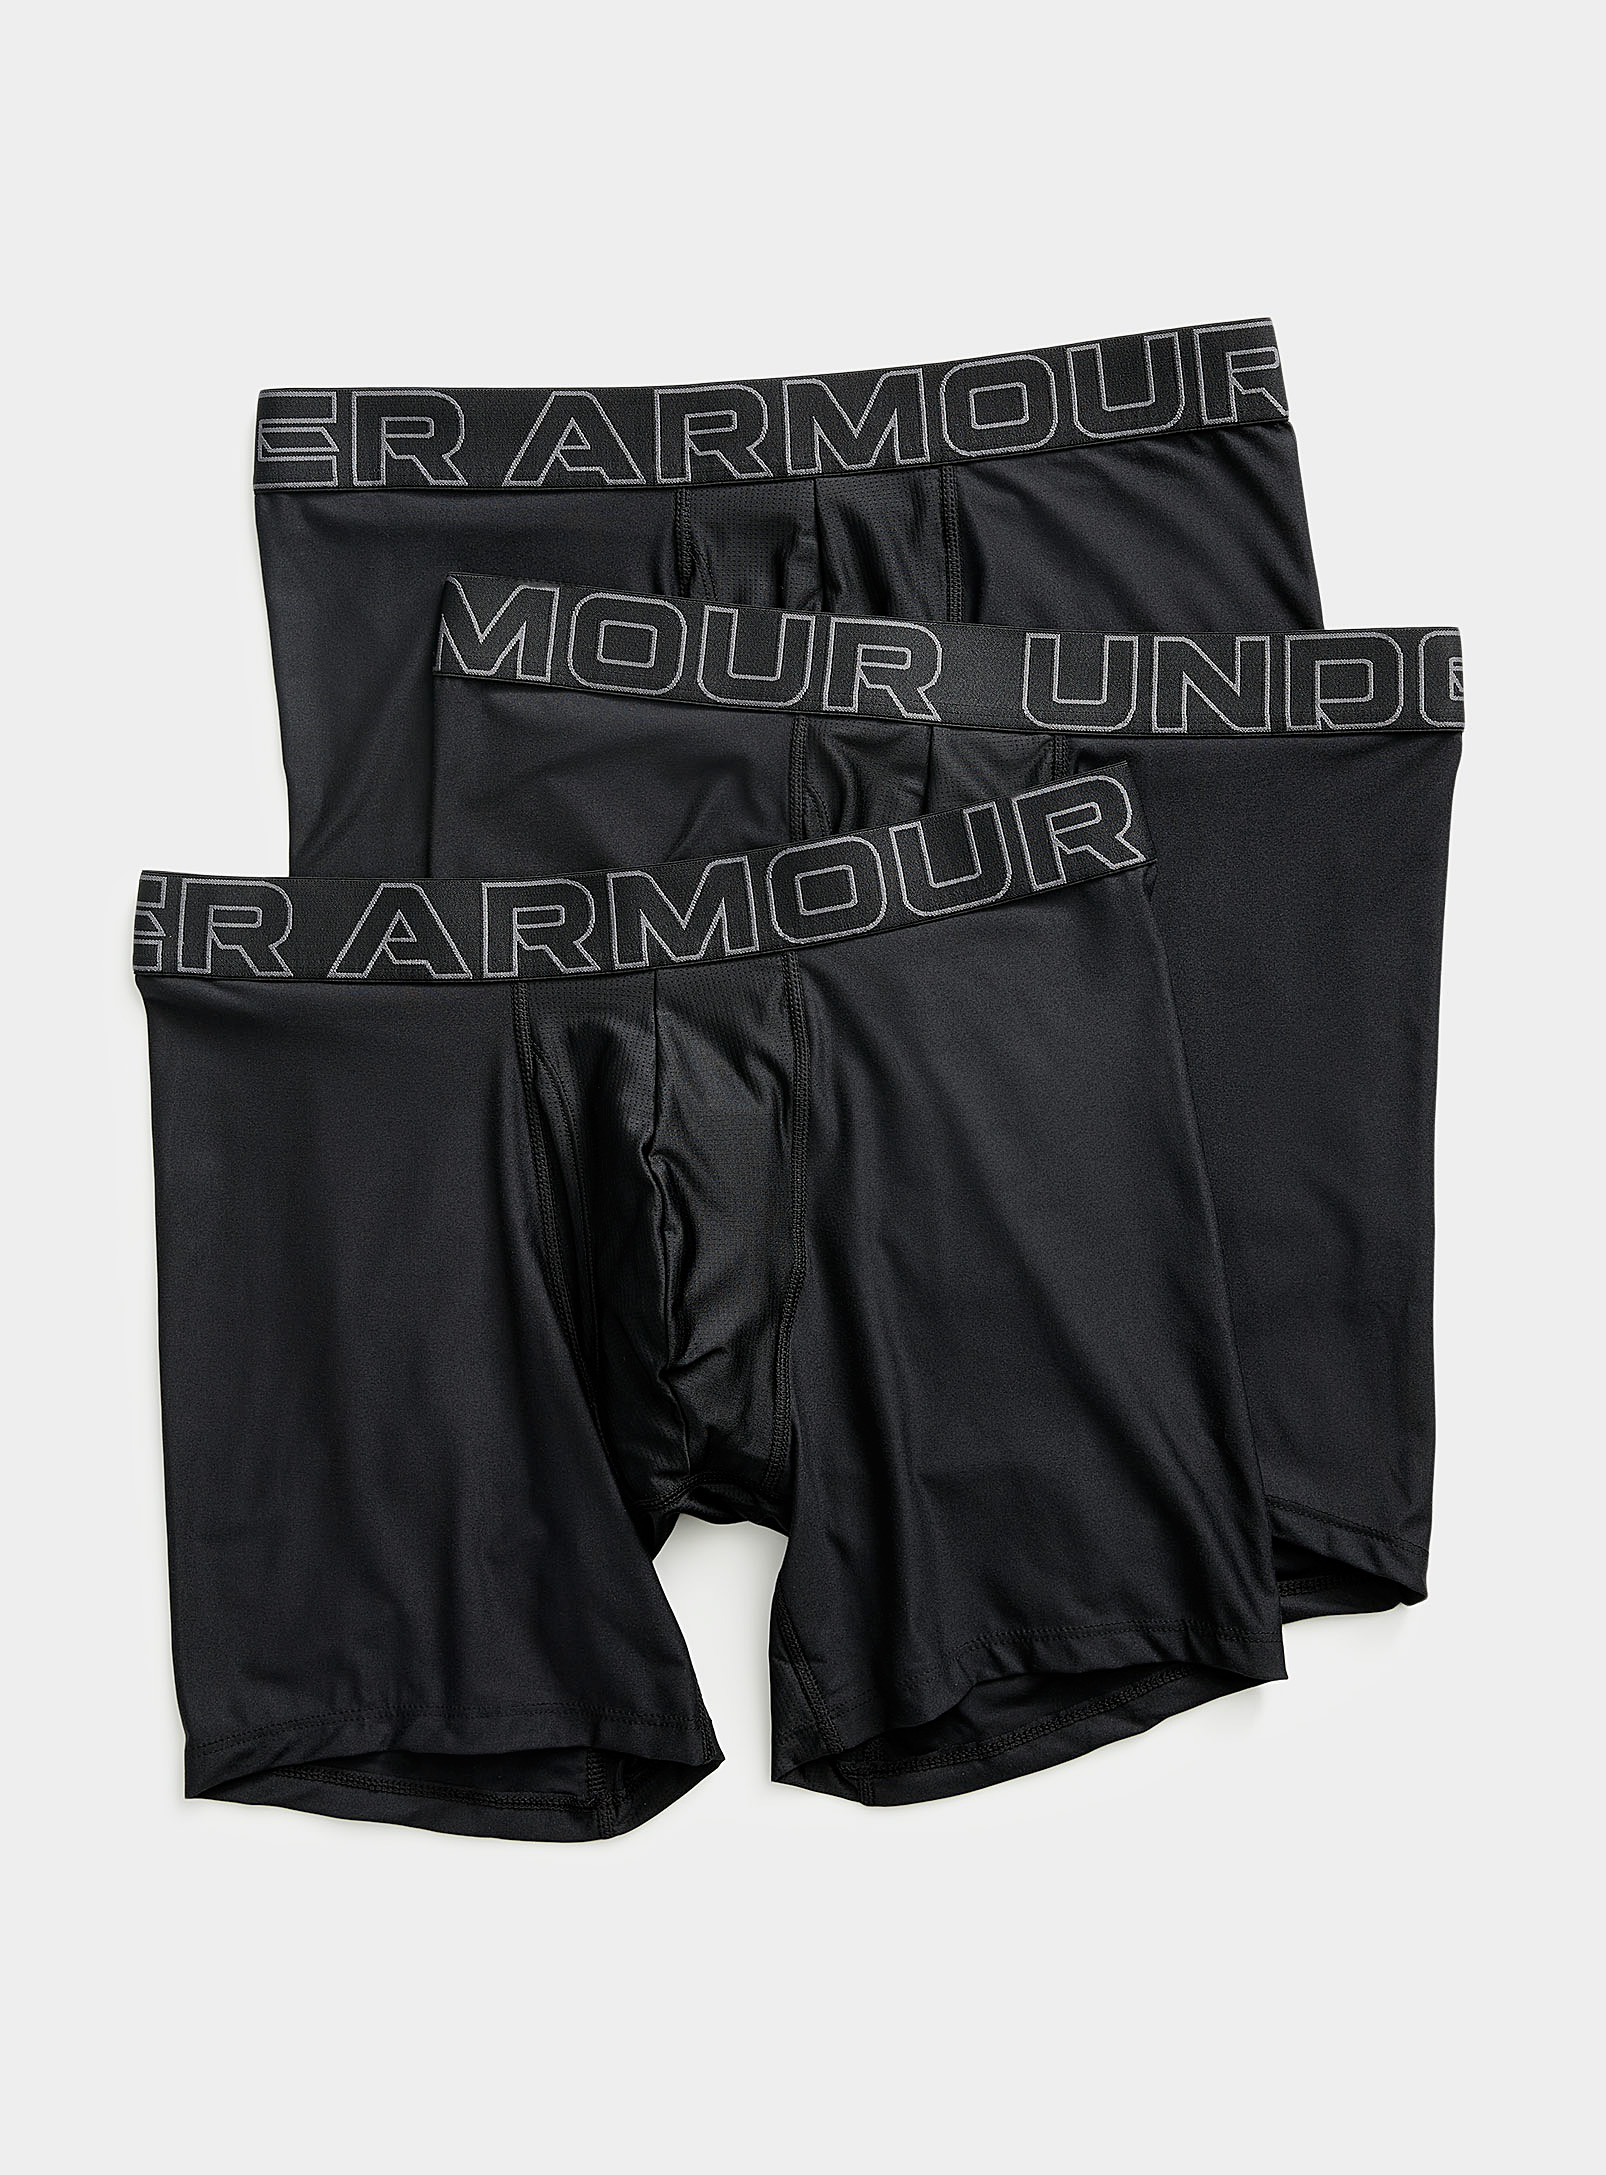 Under Armour Boxerjock Performance Boxer Briefs 3-pack In Black